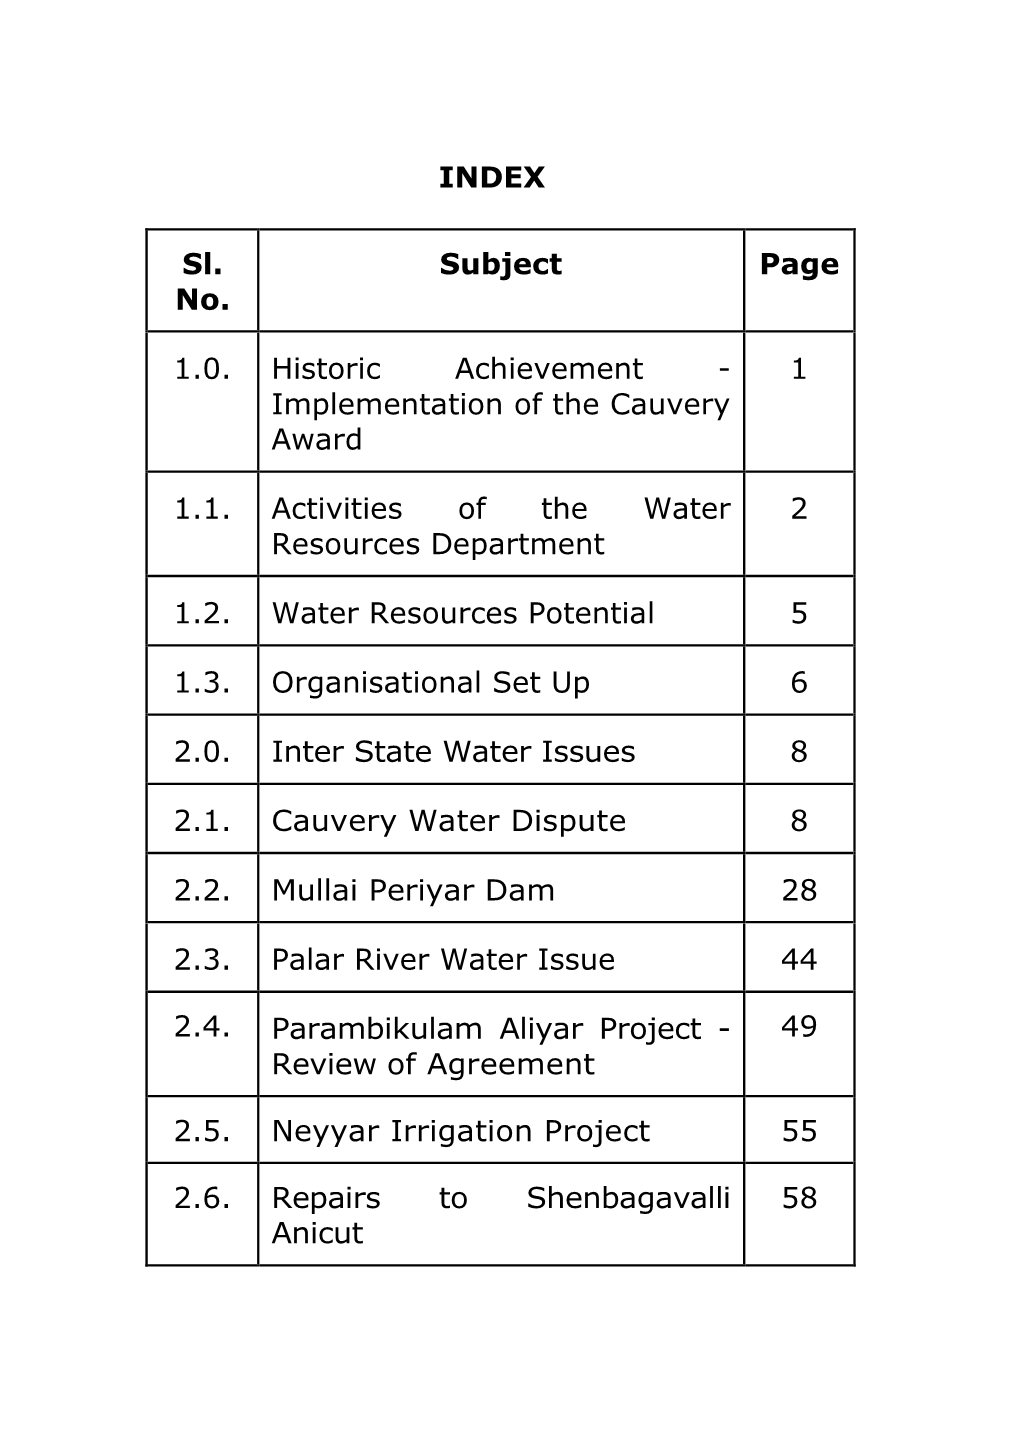 Irrigation Project 55